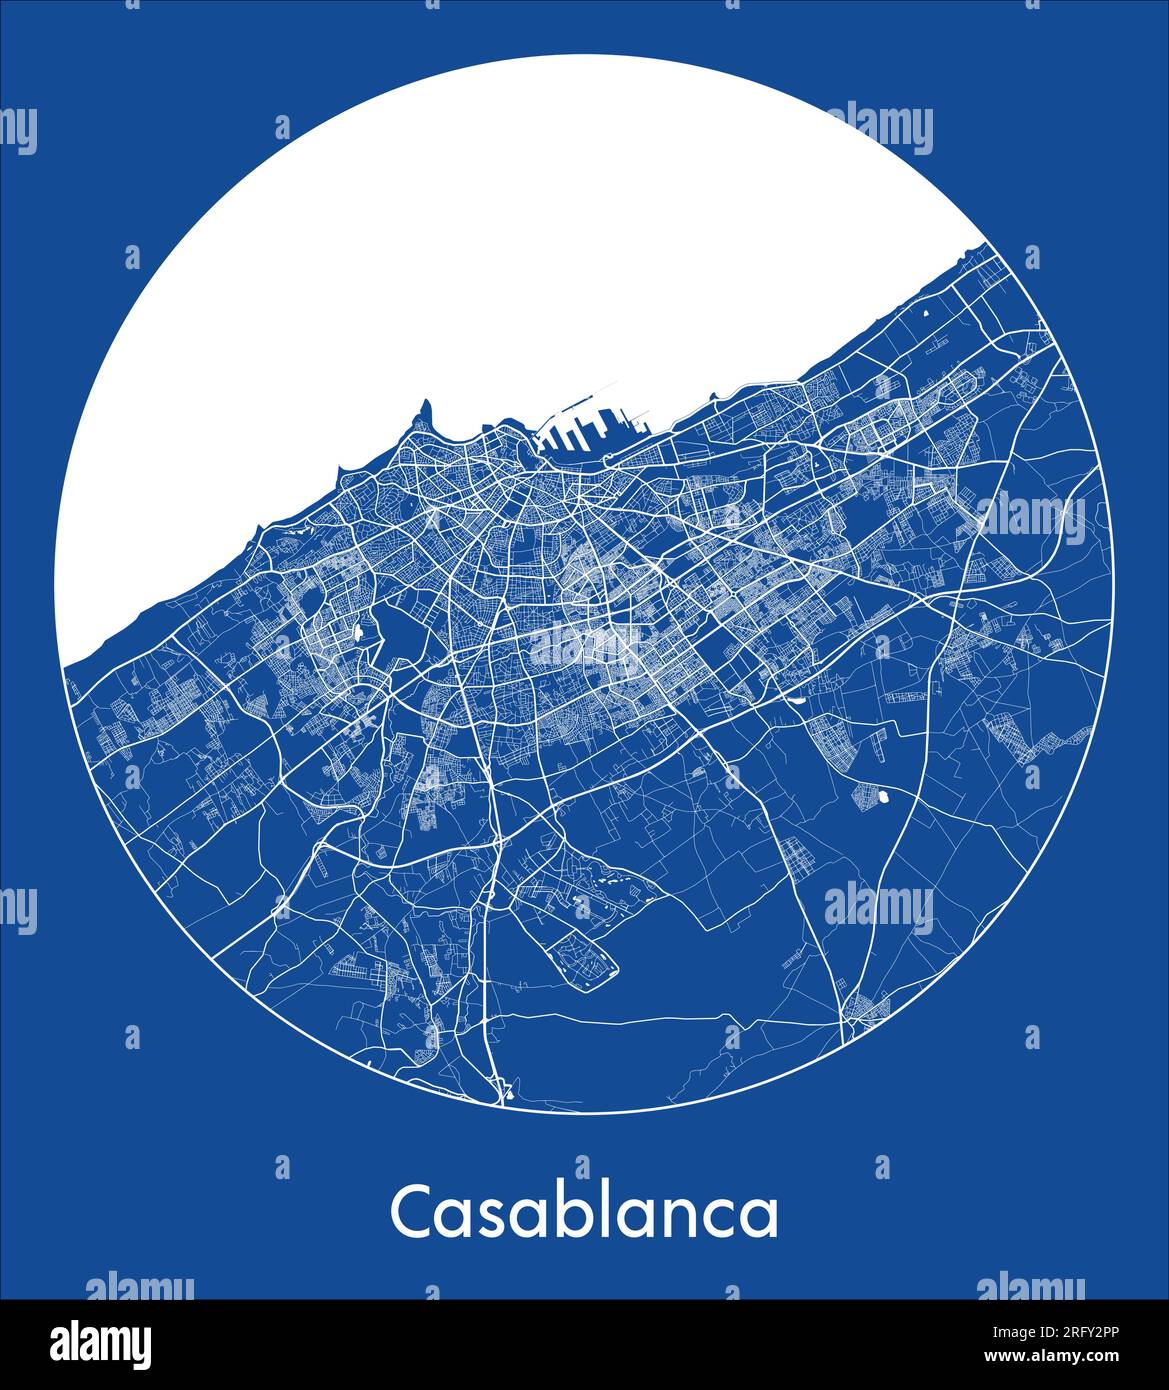 City Map Casablanca Morocco Africa blue print round Circle vector illustration Stock Vector